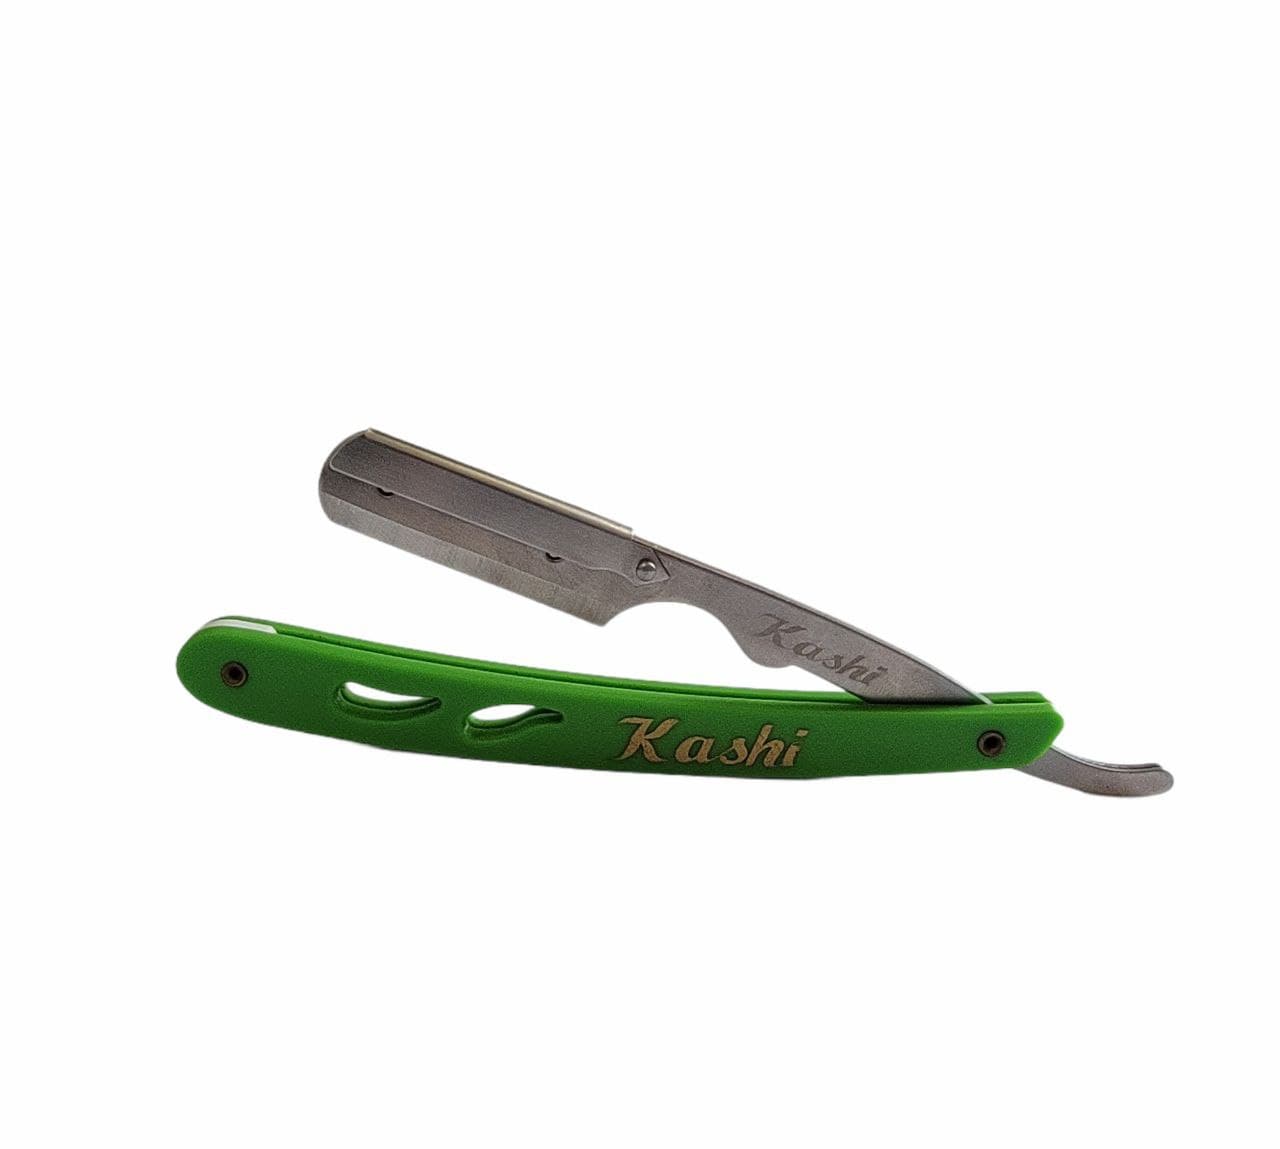 Kashi RGN-105 Barber Straight Edge Shaving Razor Green and Silver Color 